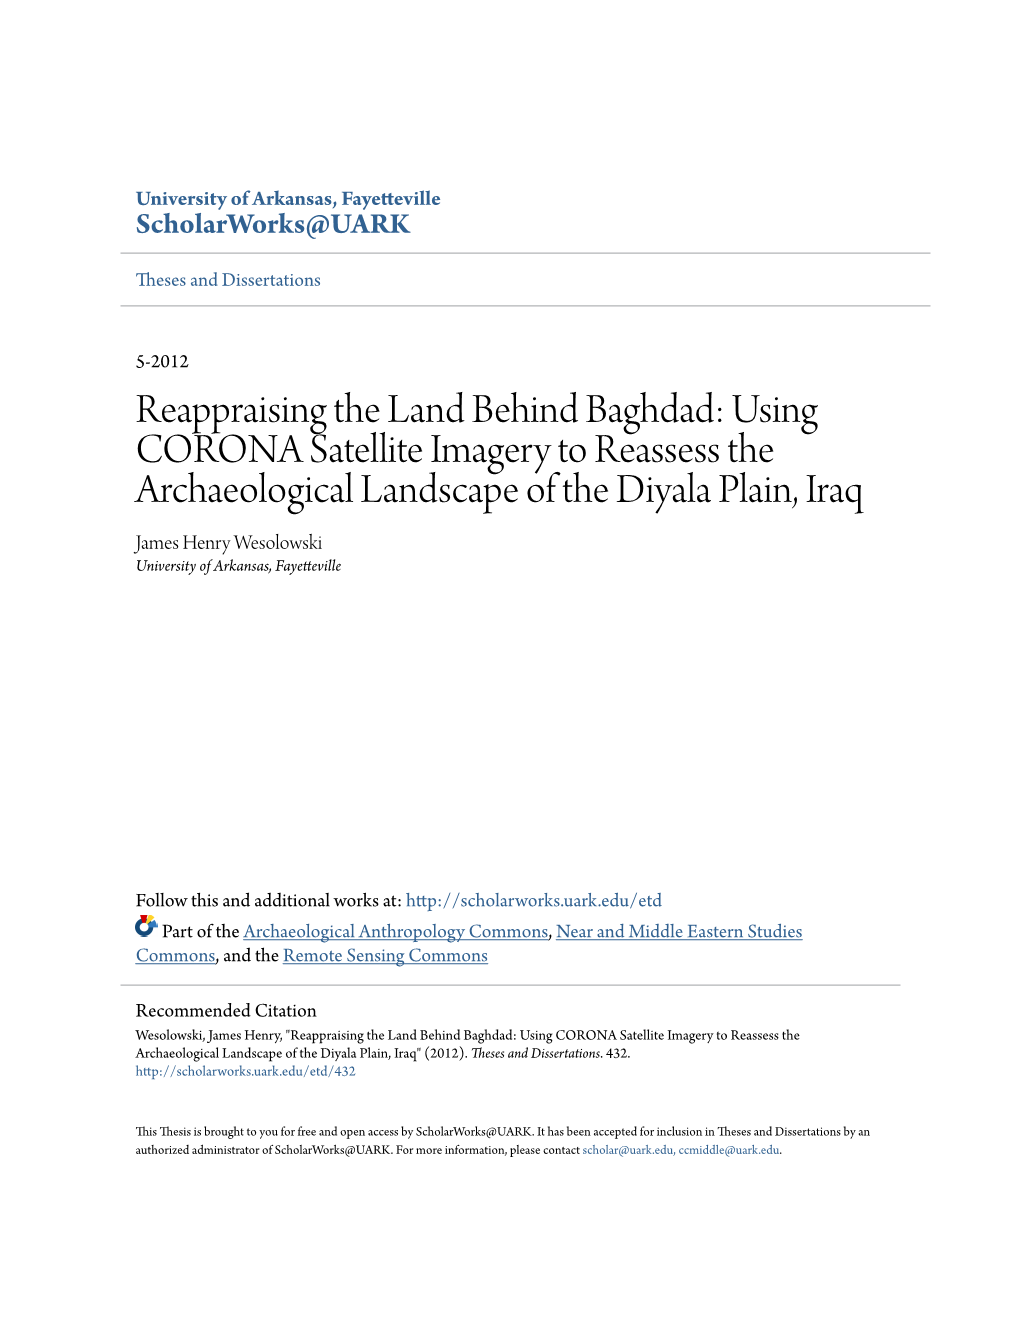 Reappraising the Land Behind Baghdad: Using CORONA Satellite